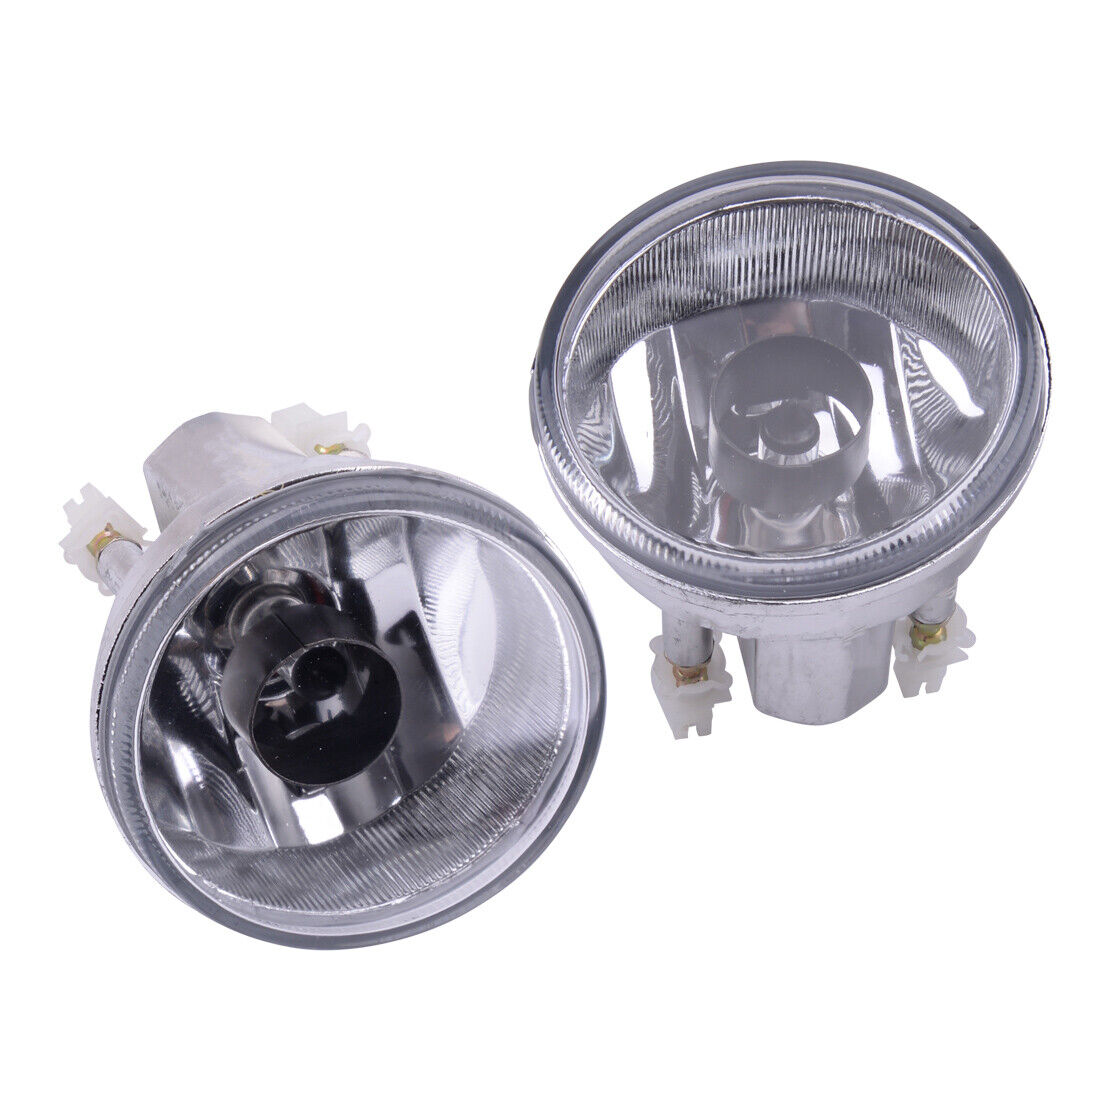 Clear Lens Pair Fog Light Lamp Fits For Suzuki SX4 2007-2011 Aerio 2002-2004